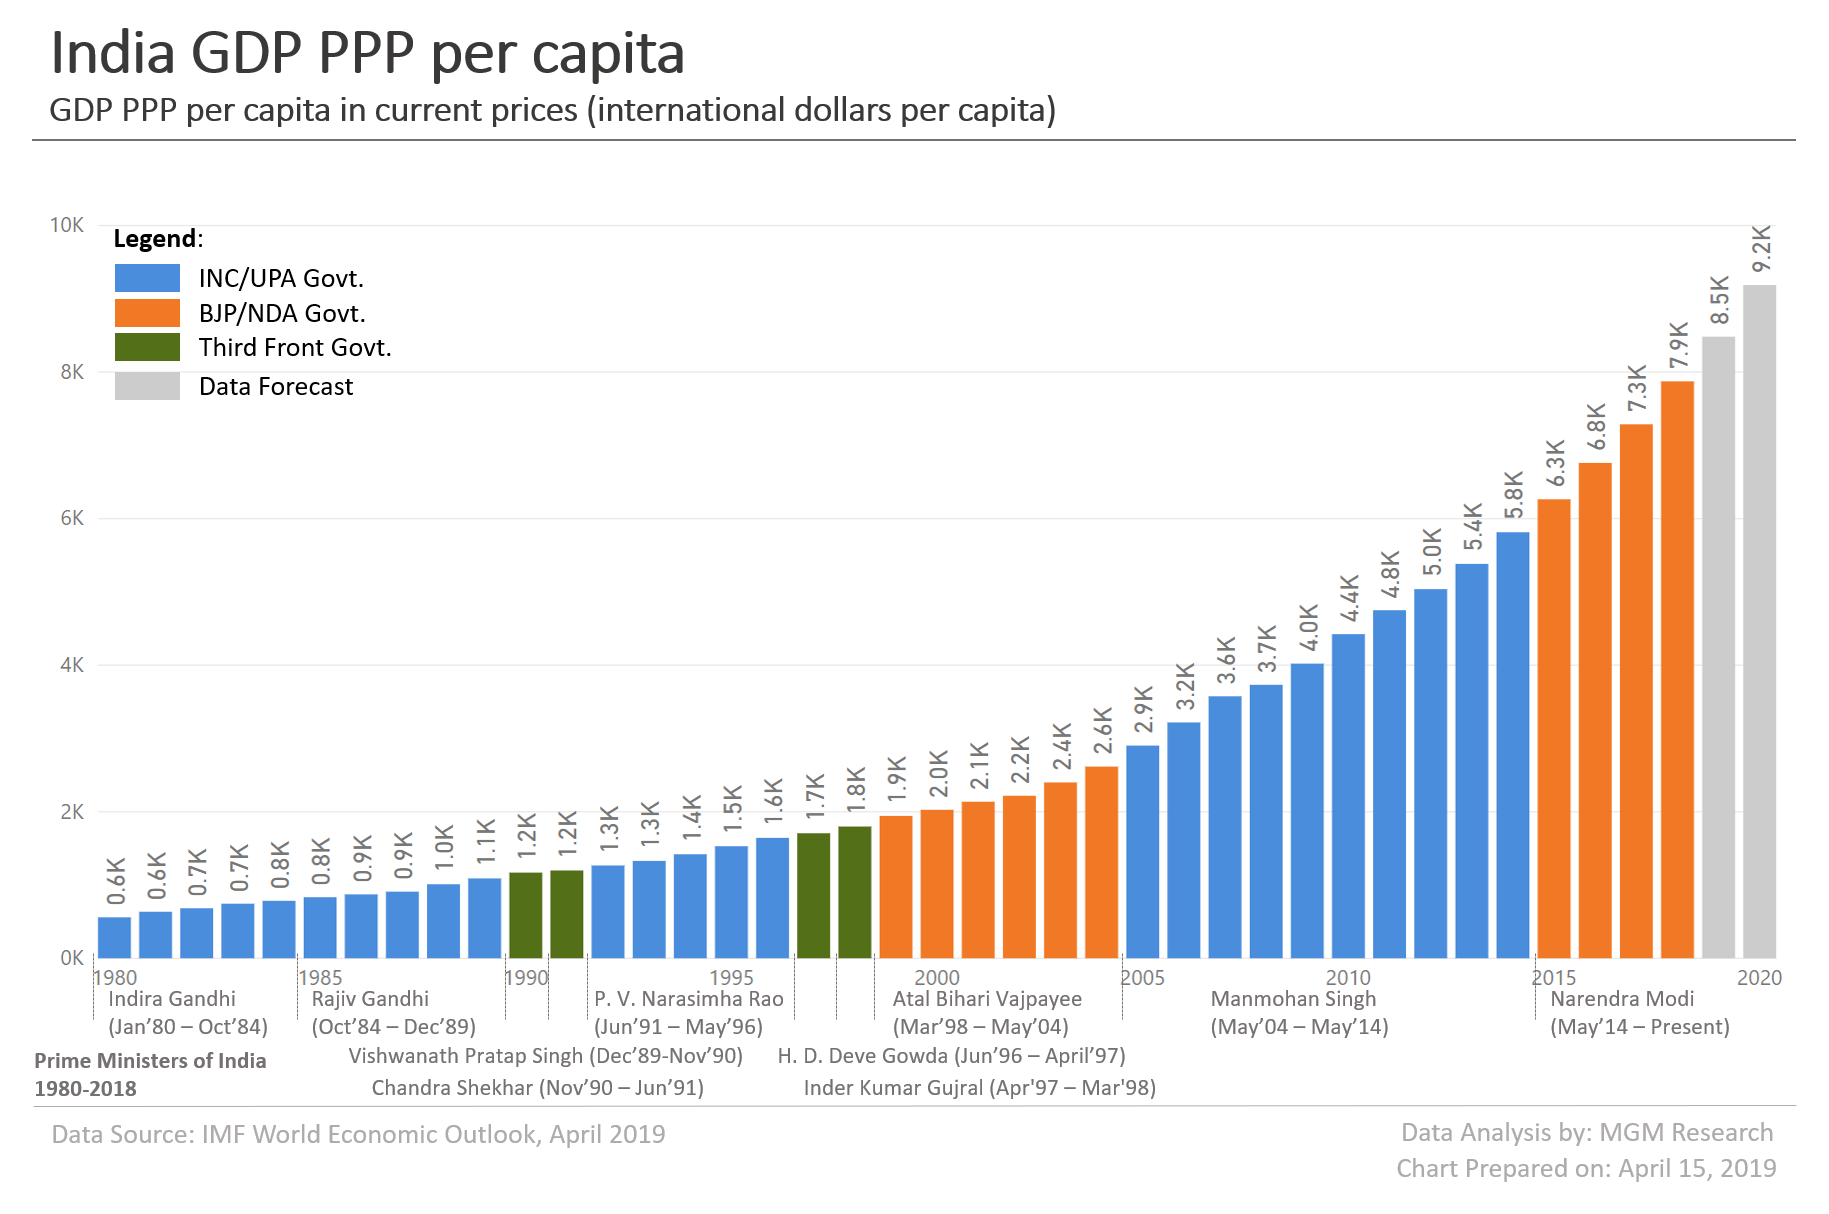 India GDP PPP per capita 1980-2020 2